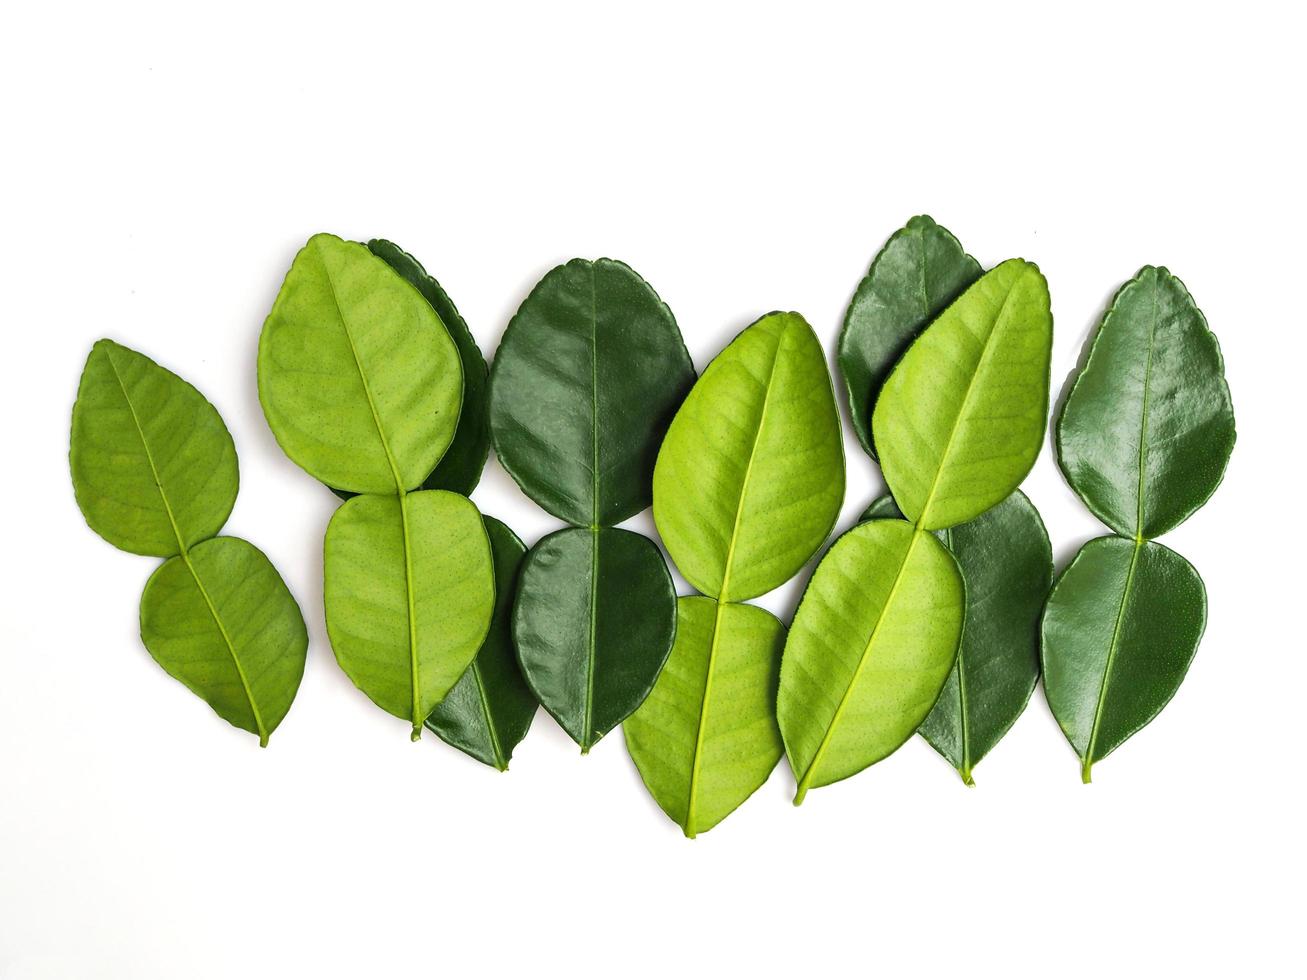 Kaffir lime leaves fresh bergamot leaf isolated on white background. photo